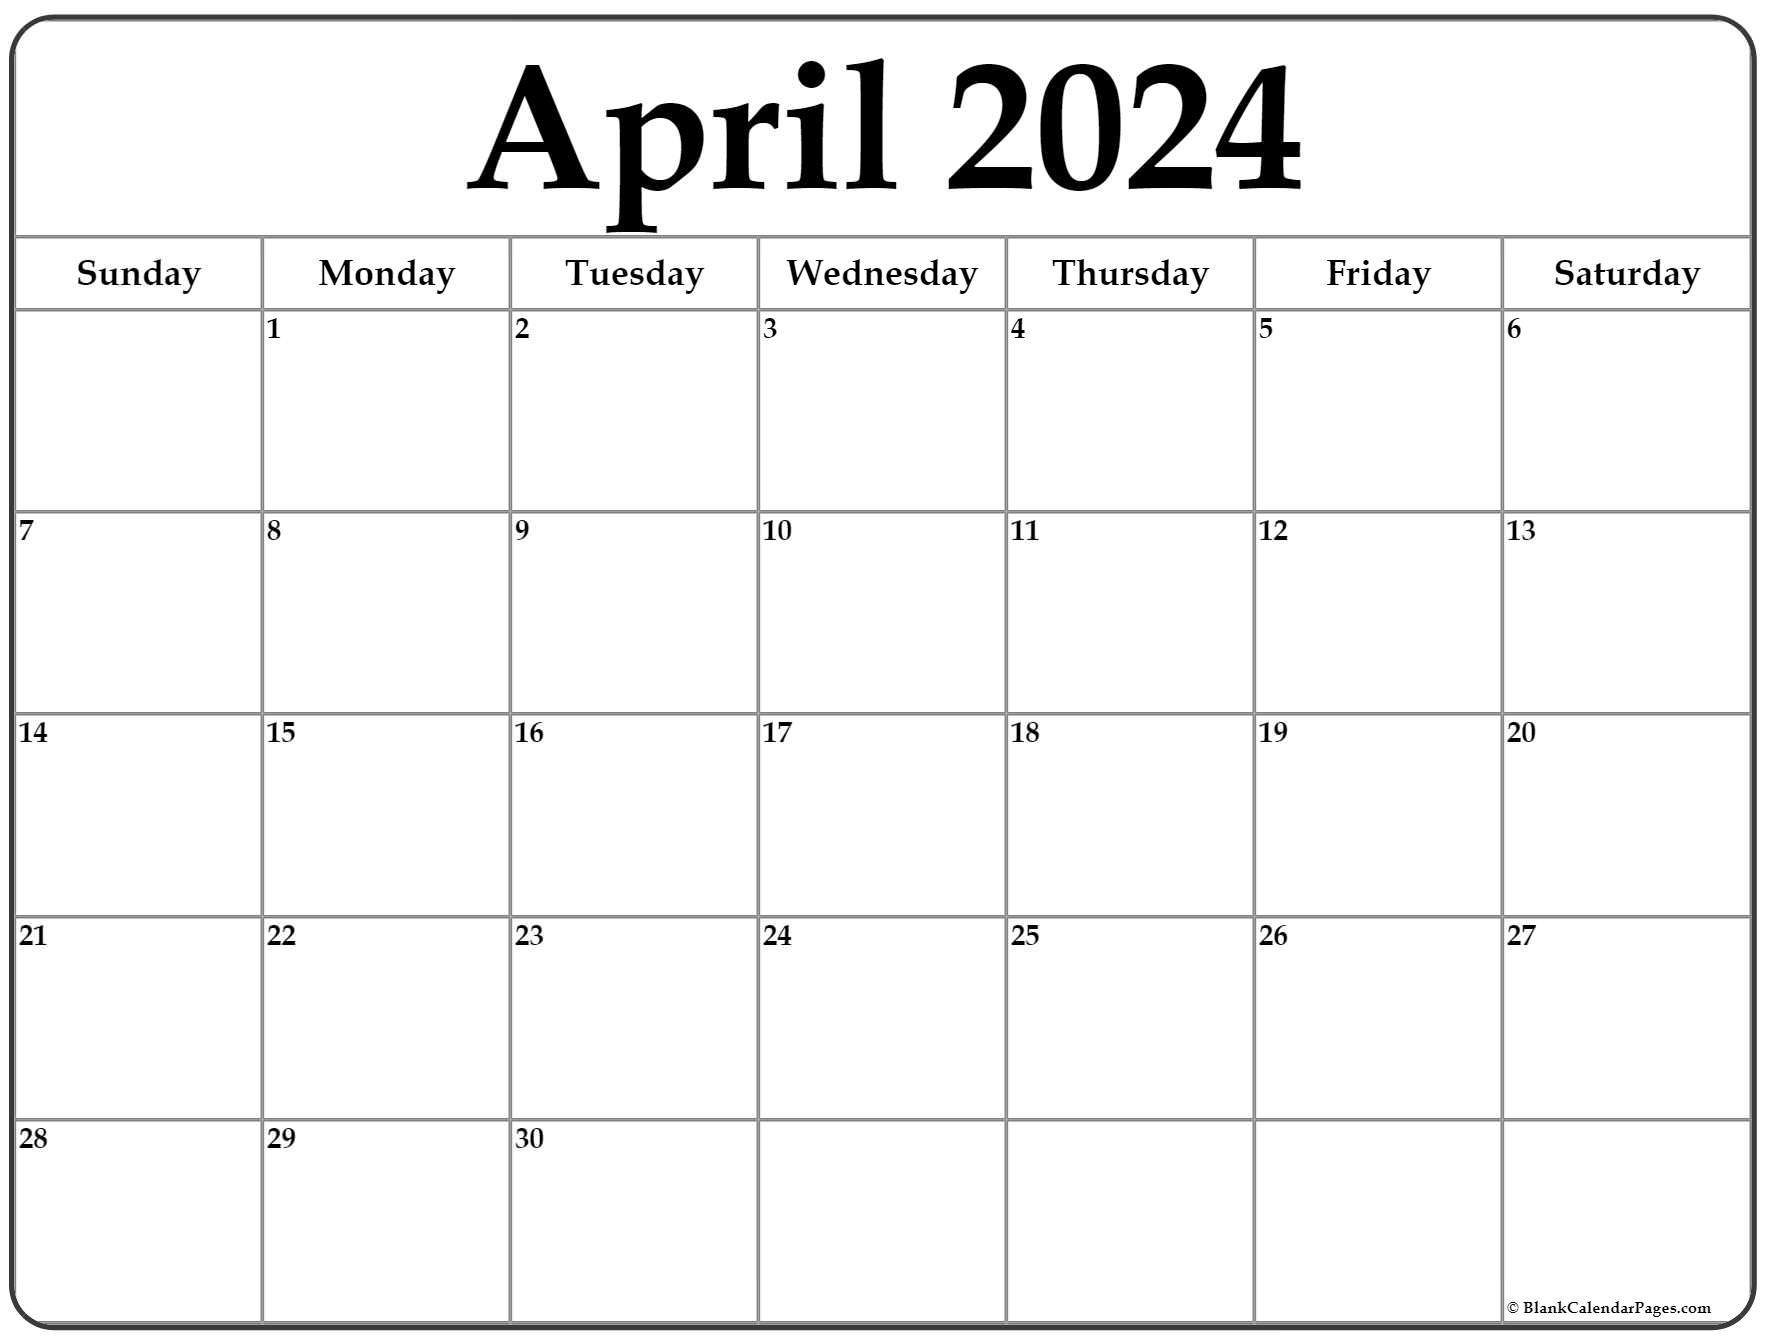 Year 2024 Calendar Printable with Holidays - Wiki Calendar